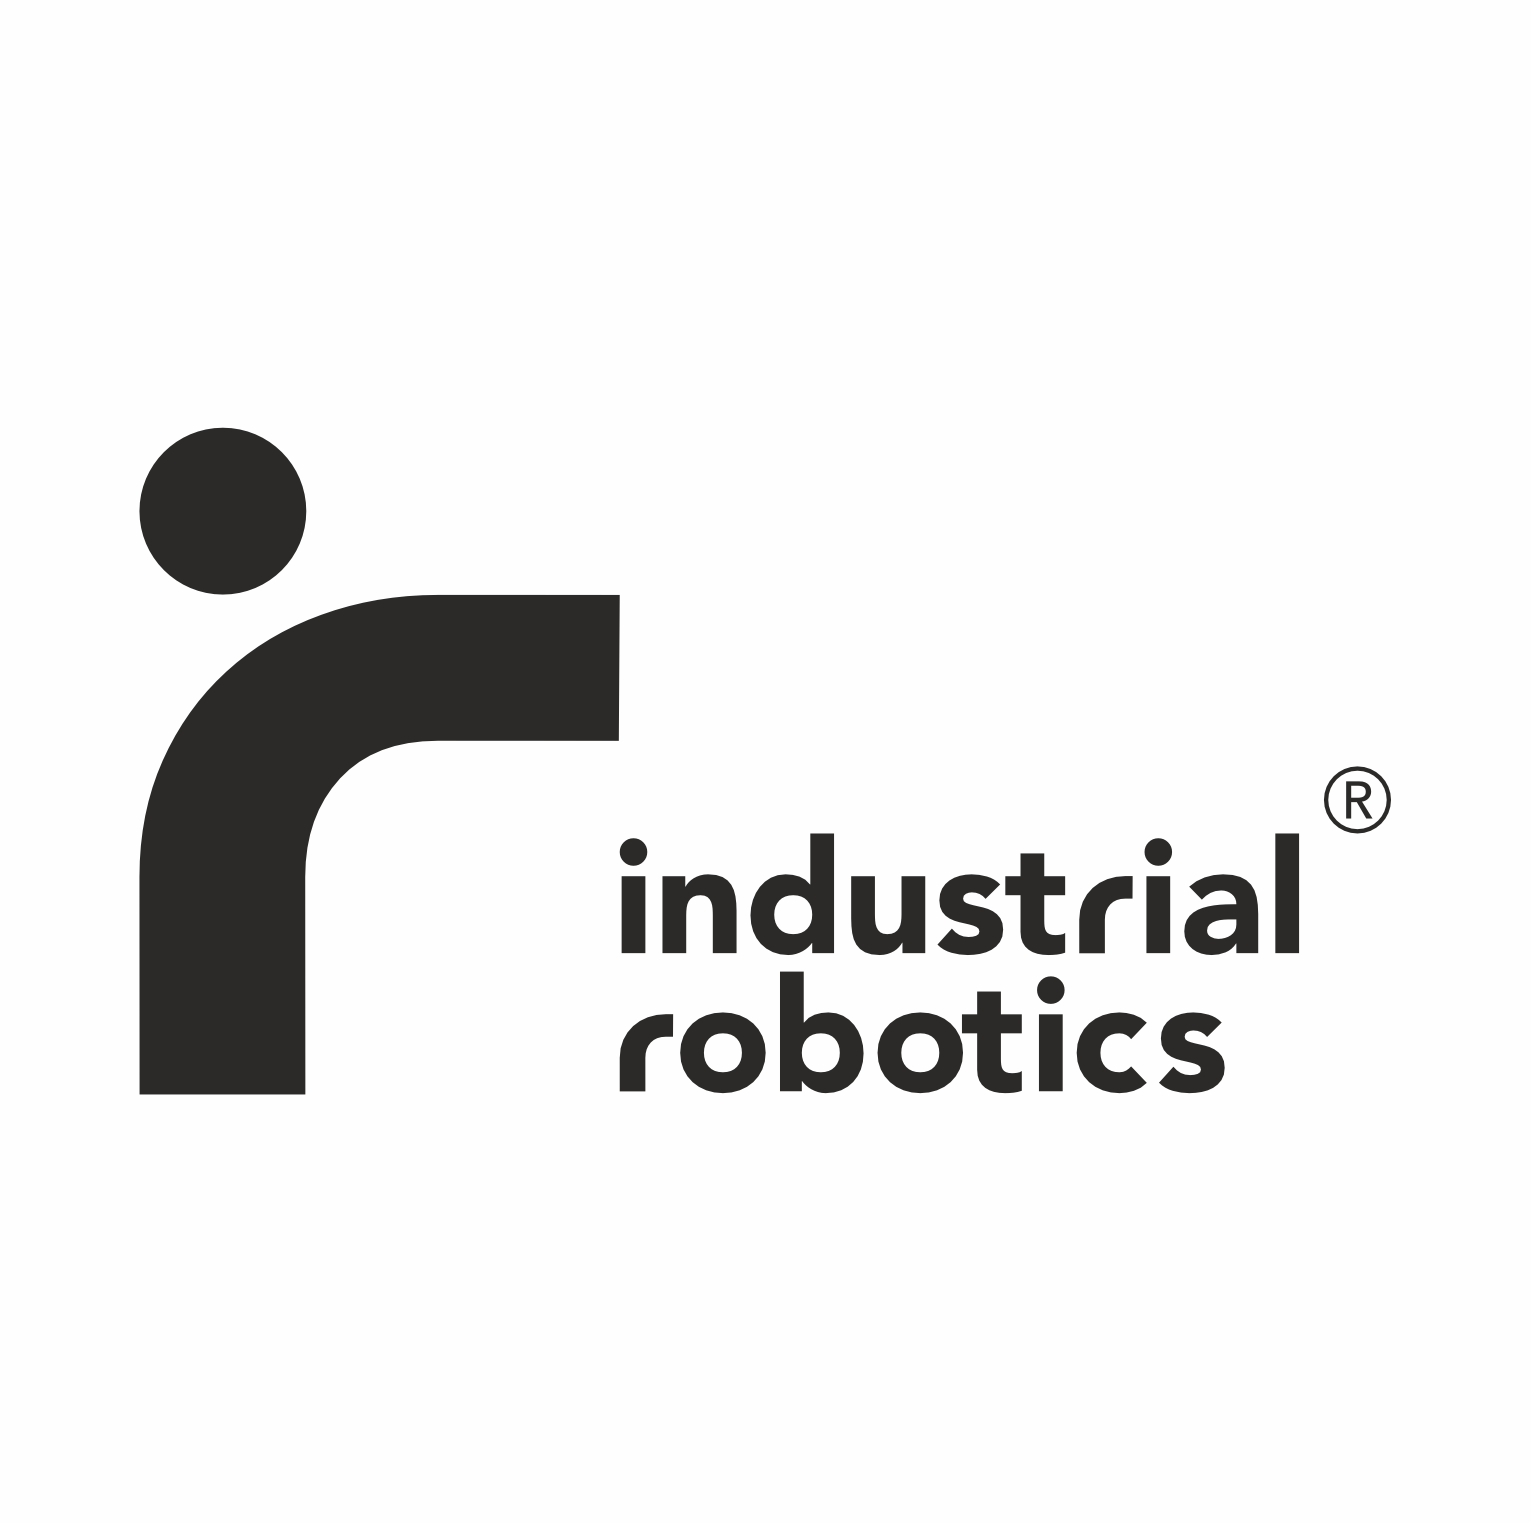 Company's Industrial Robotics Company, UAB logo